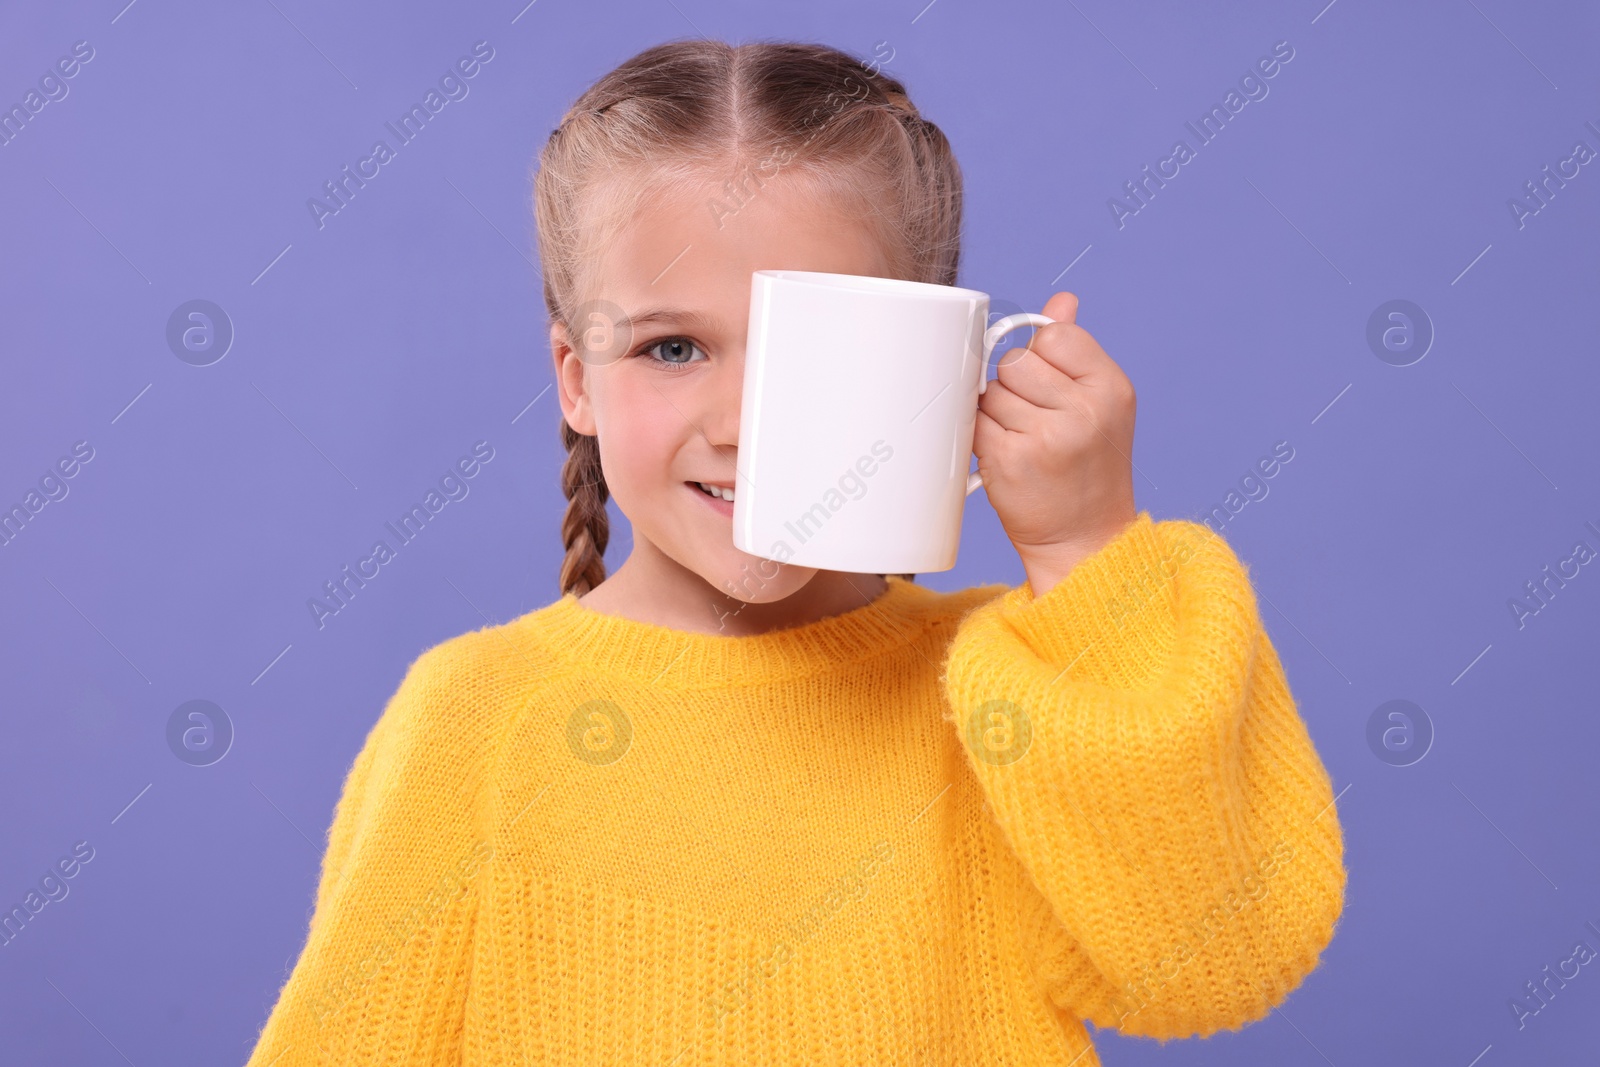 Photo of Happy girl covering eye with white ceramic mug on violet background